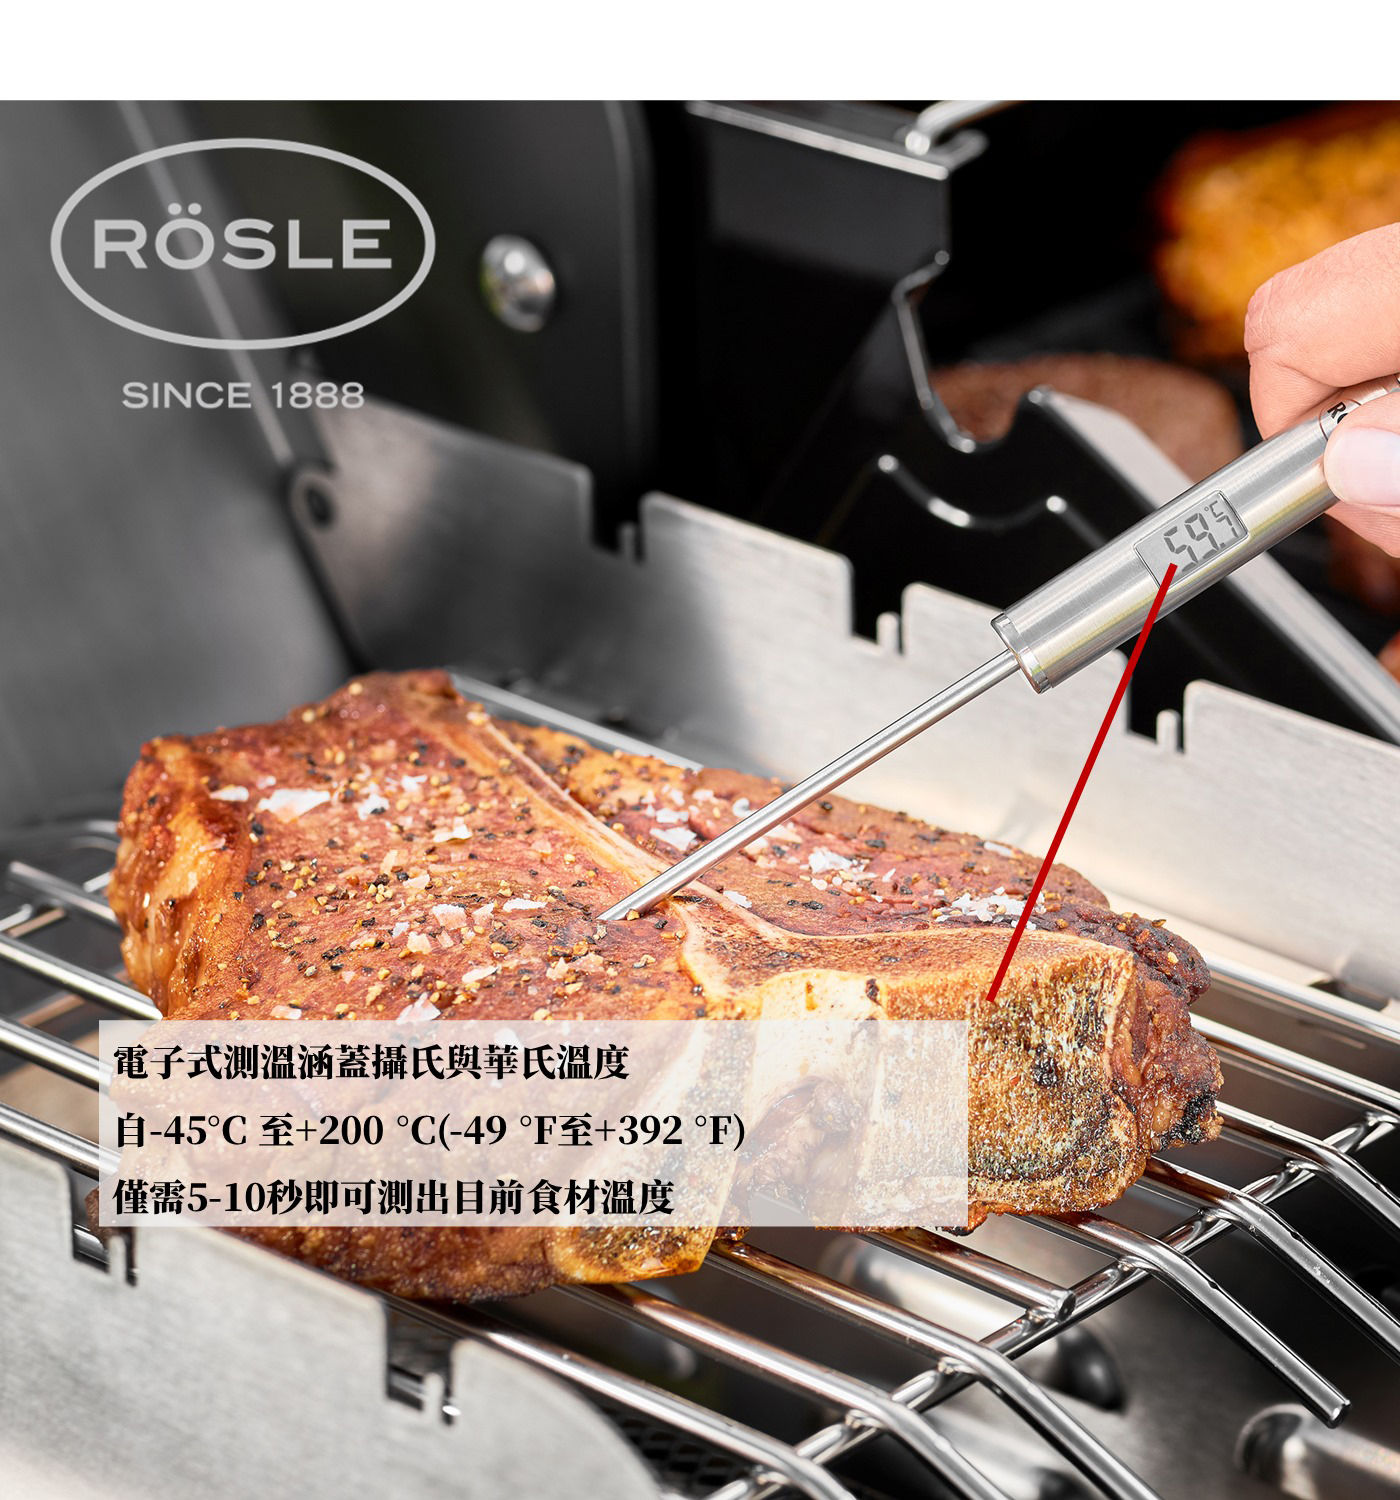 Rosle針式溫度計電子式測溫涵蓋攝氏與華氏溫度.自-45°C至+200°C.僅需5-10秒即可測出目前食材溫度